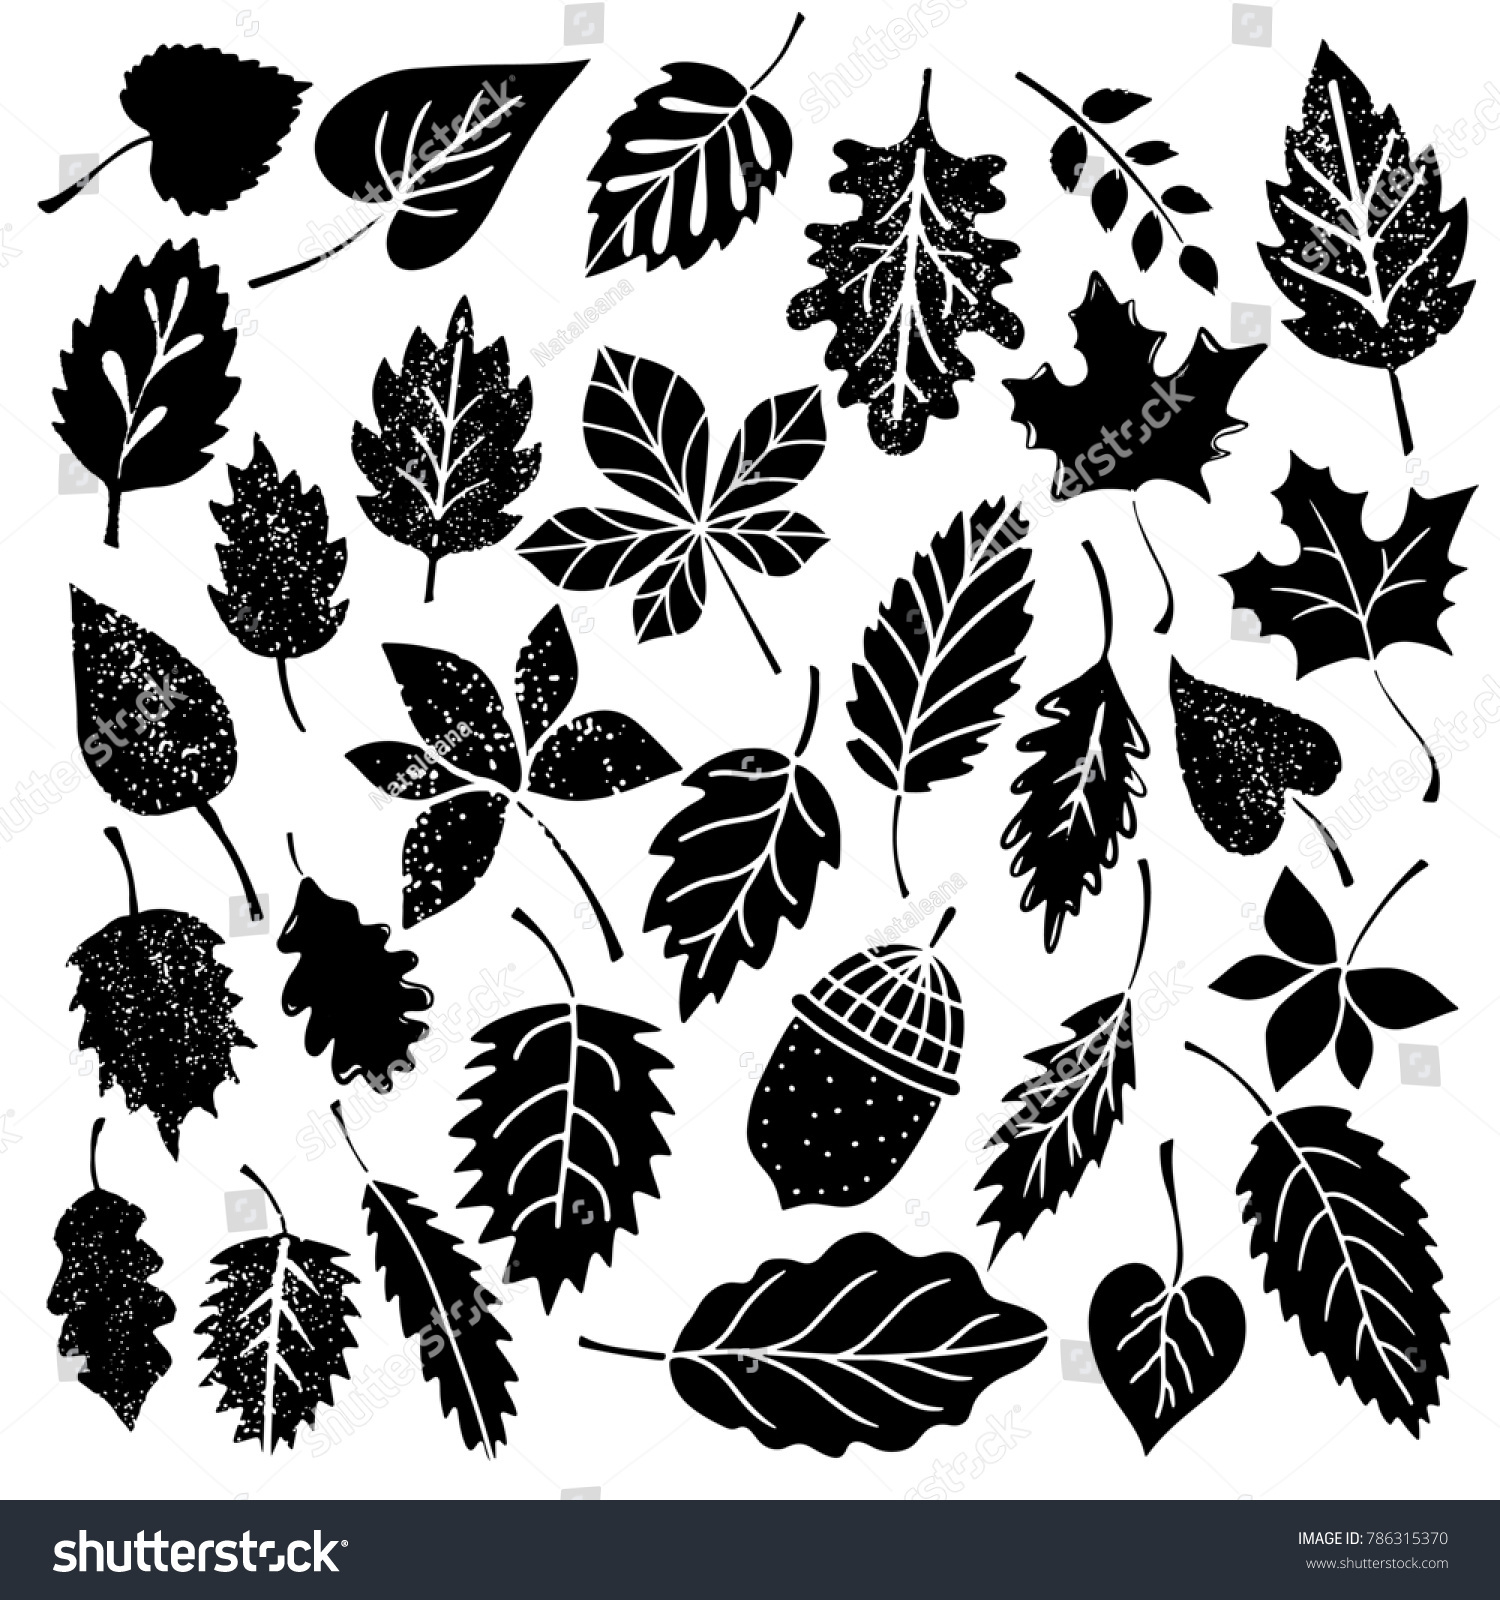 Leaves Acorn Black Silhouettes Distressed Isolated Stock Illustration ...